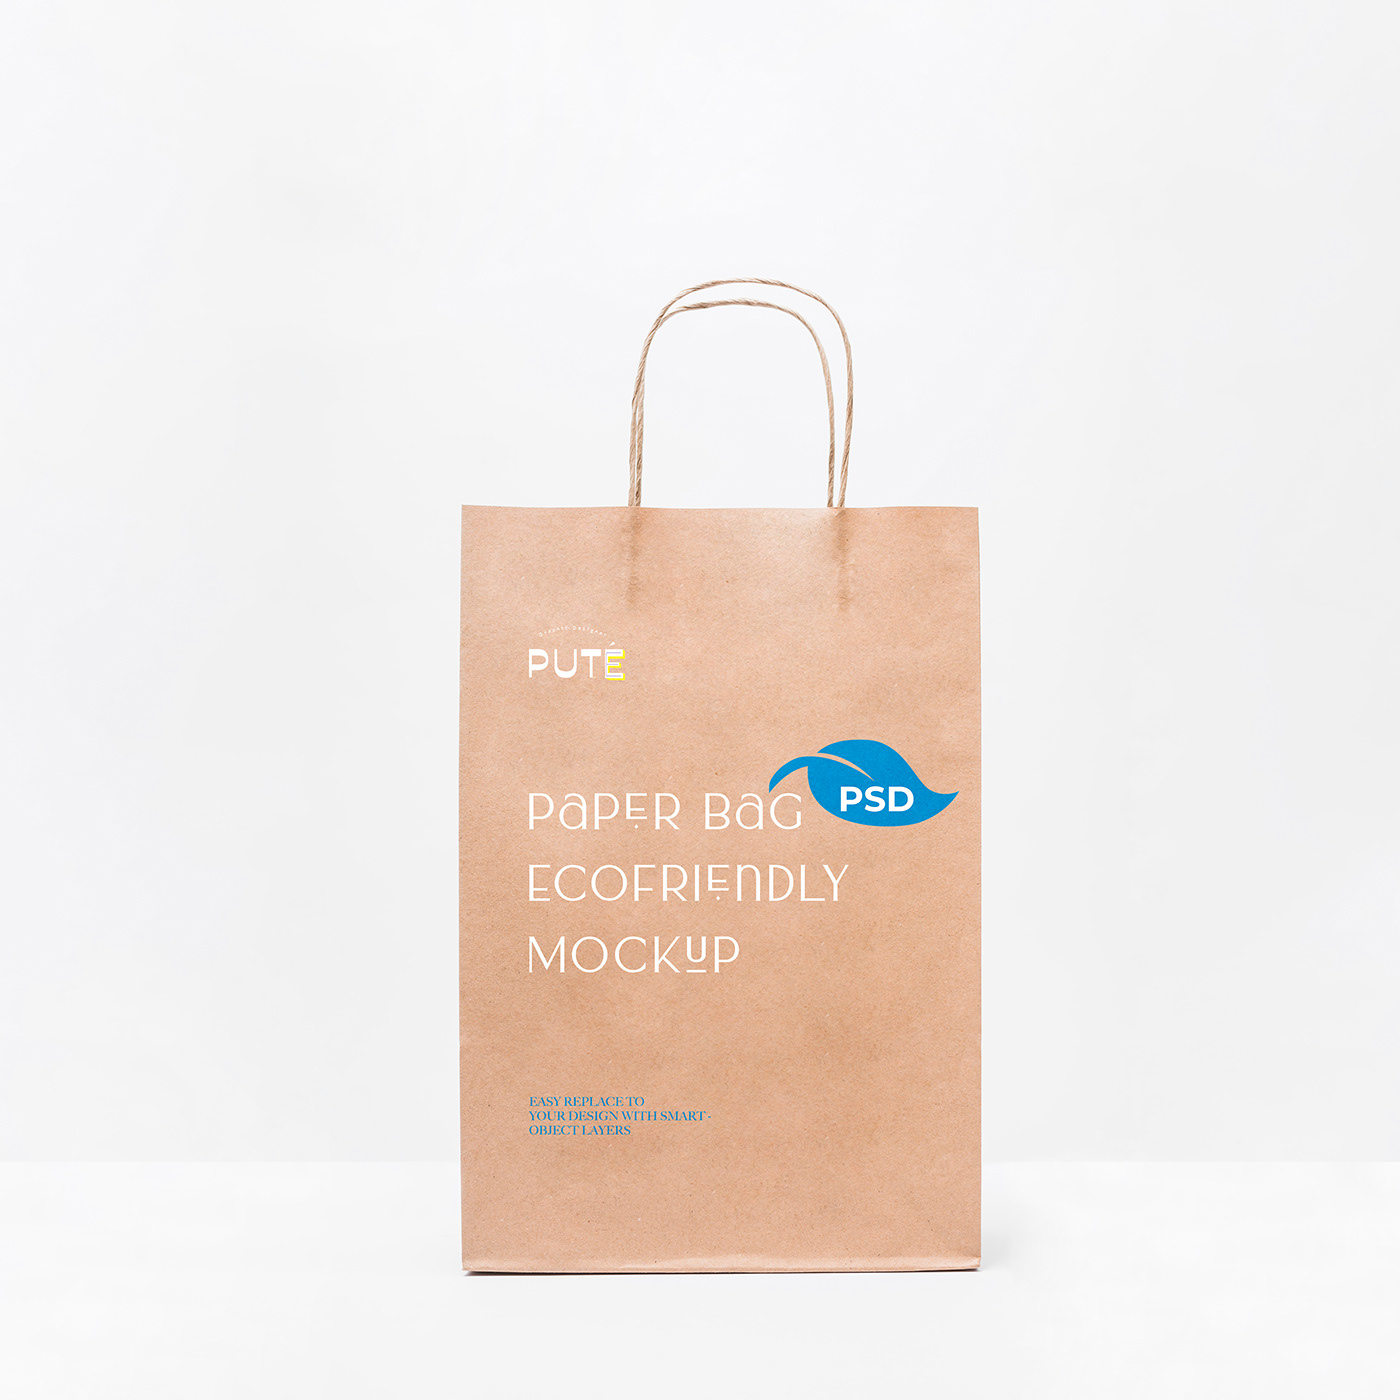 bread BREADBRAND ecobags ecofriendly minimalist Mockup Packaging paper paperbags simple